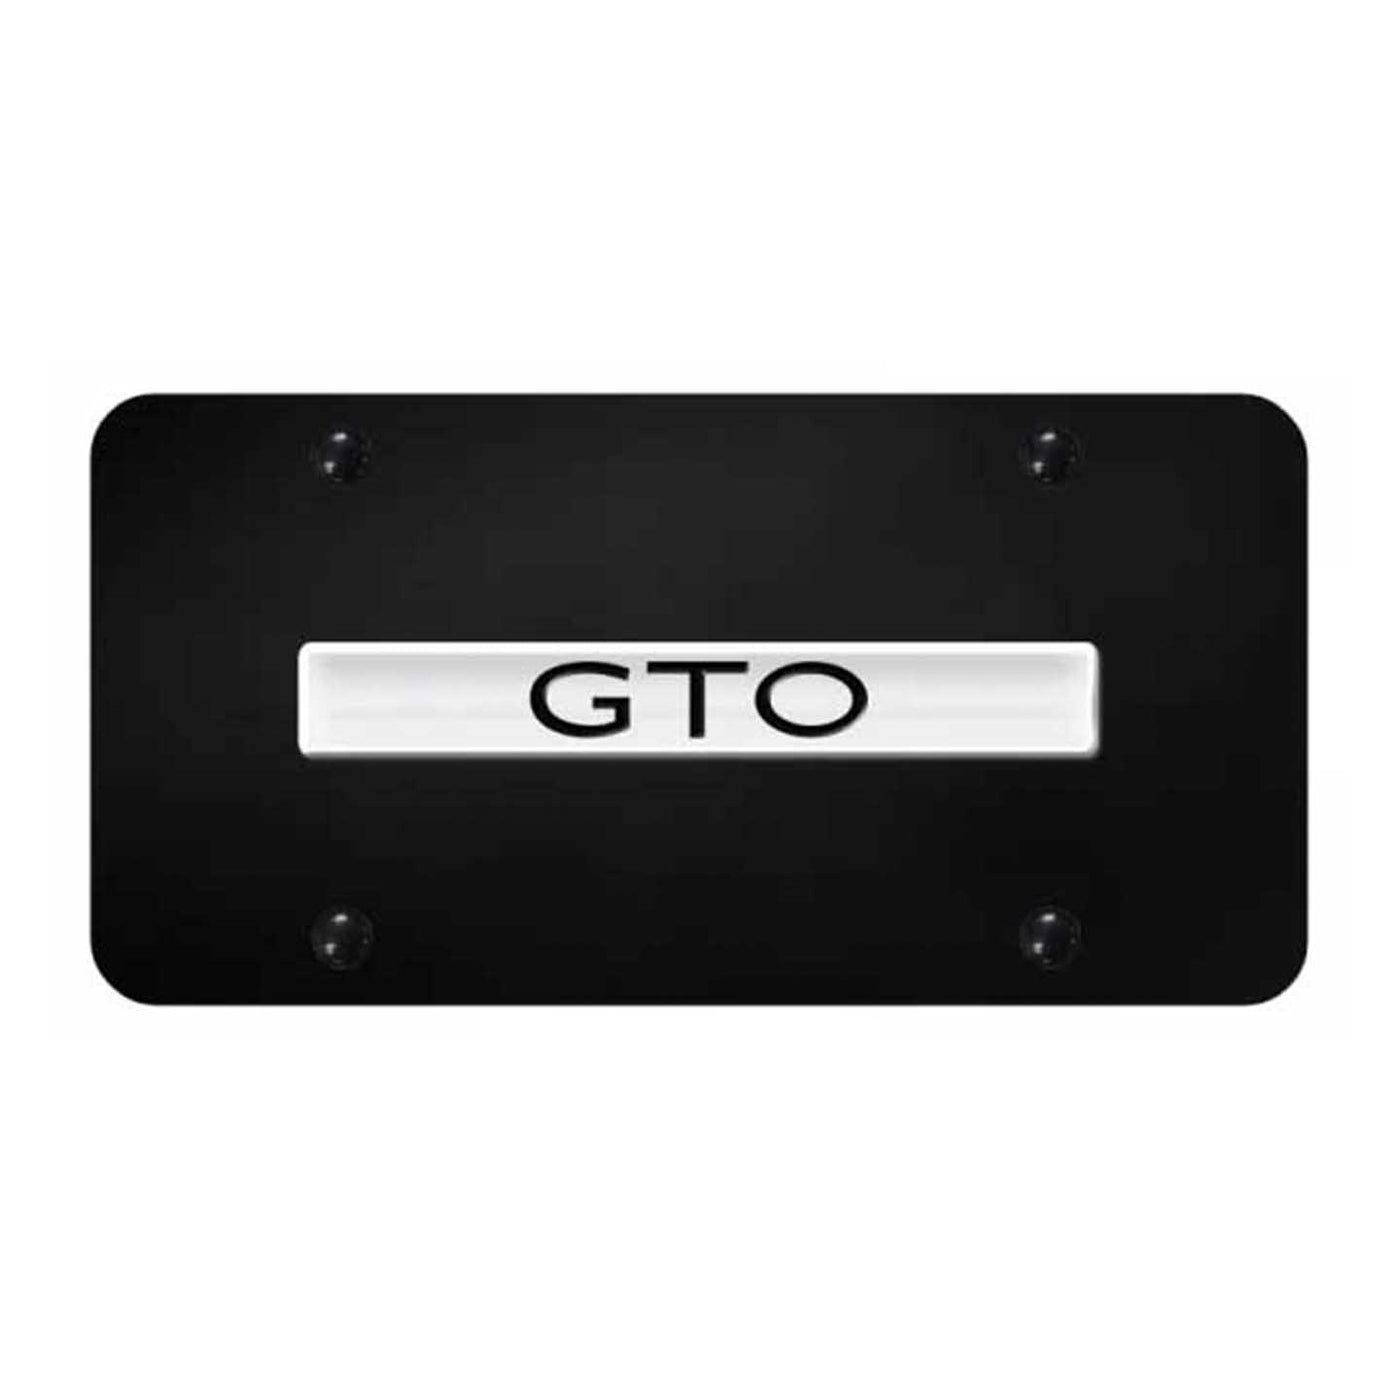 GTO Name License Plate - Chrome on Black